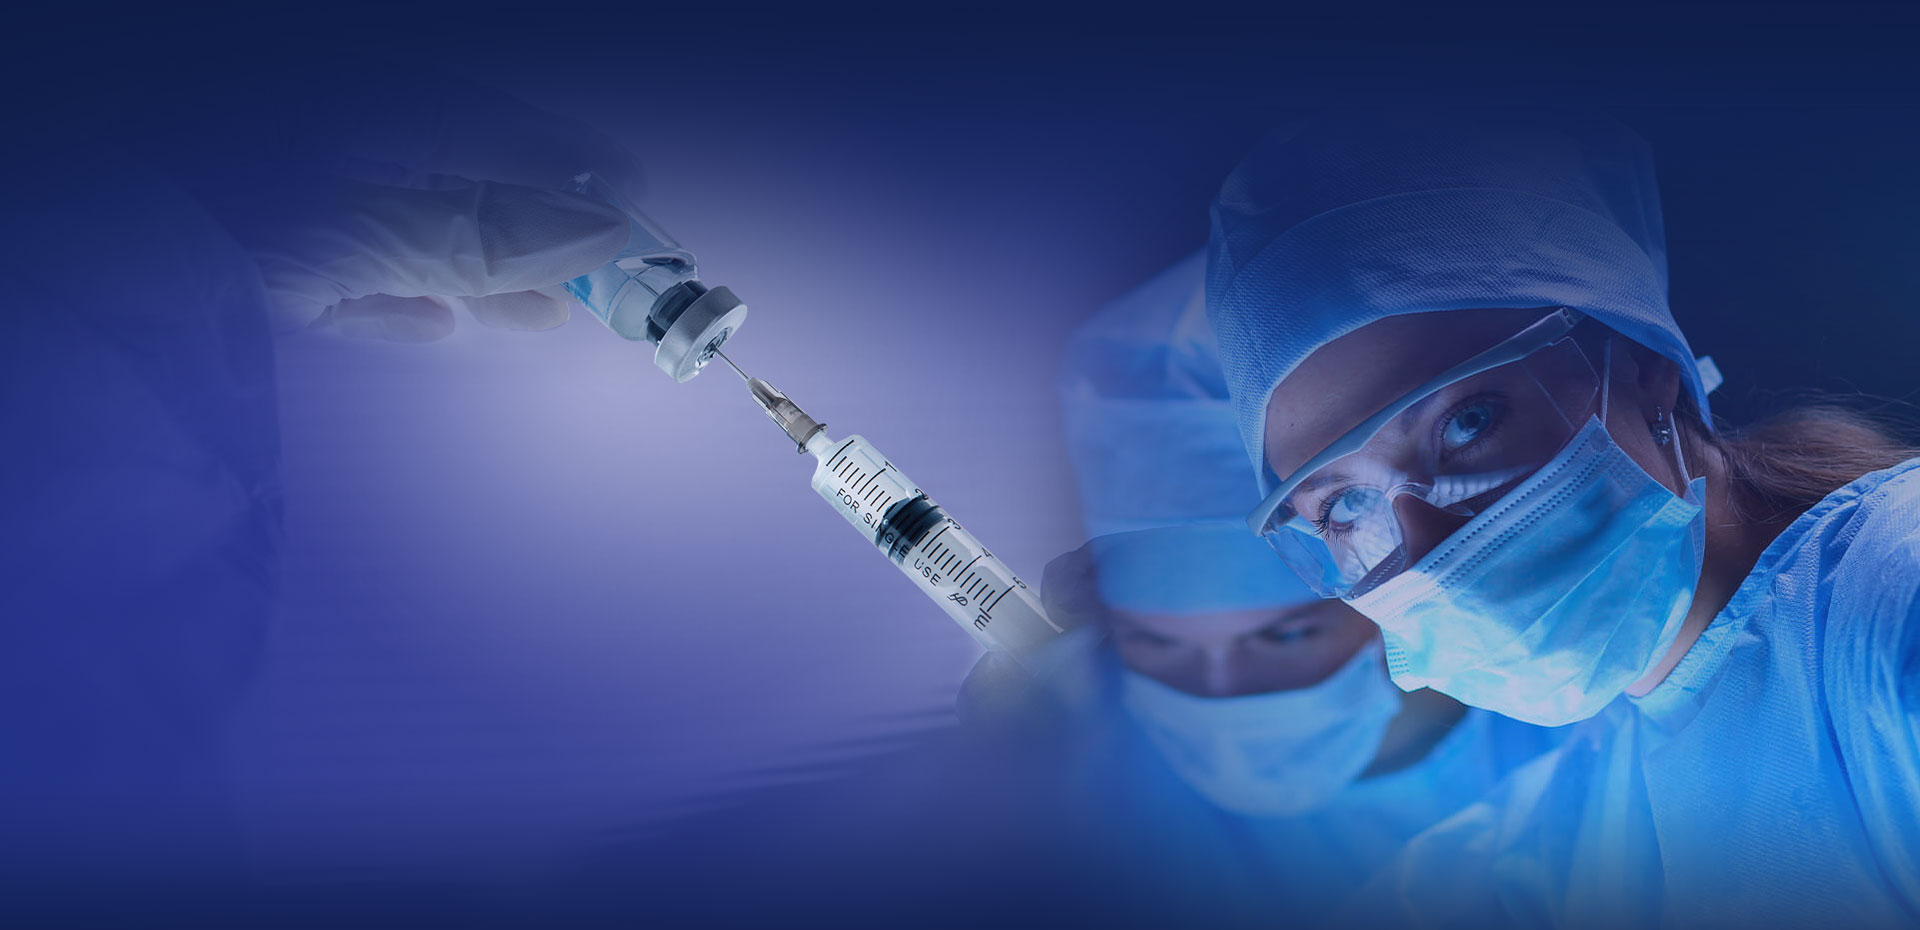 Leading Disposable Syringe &  Infusion Set Manufactuer